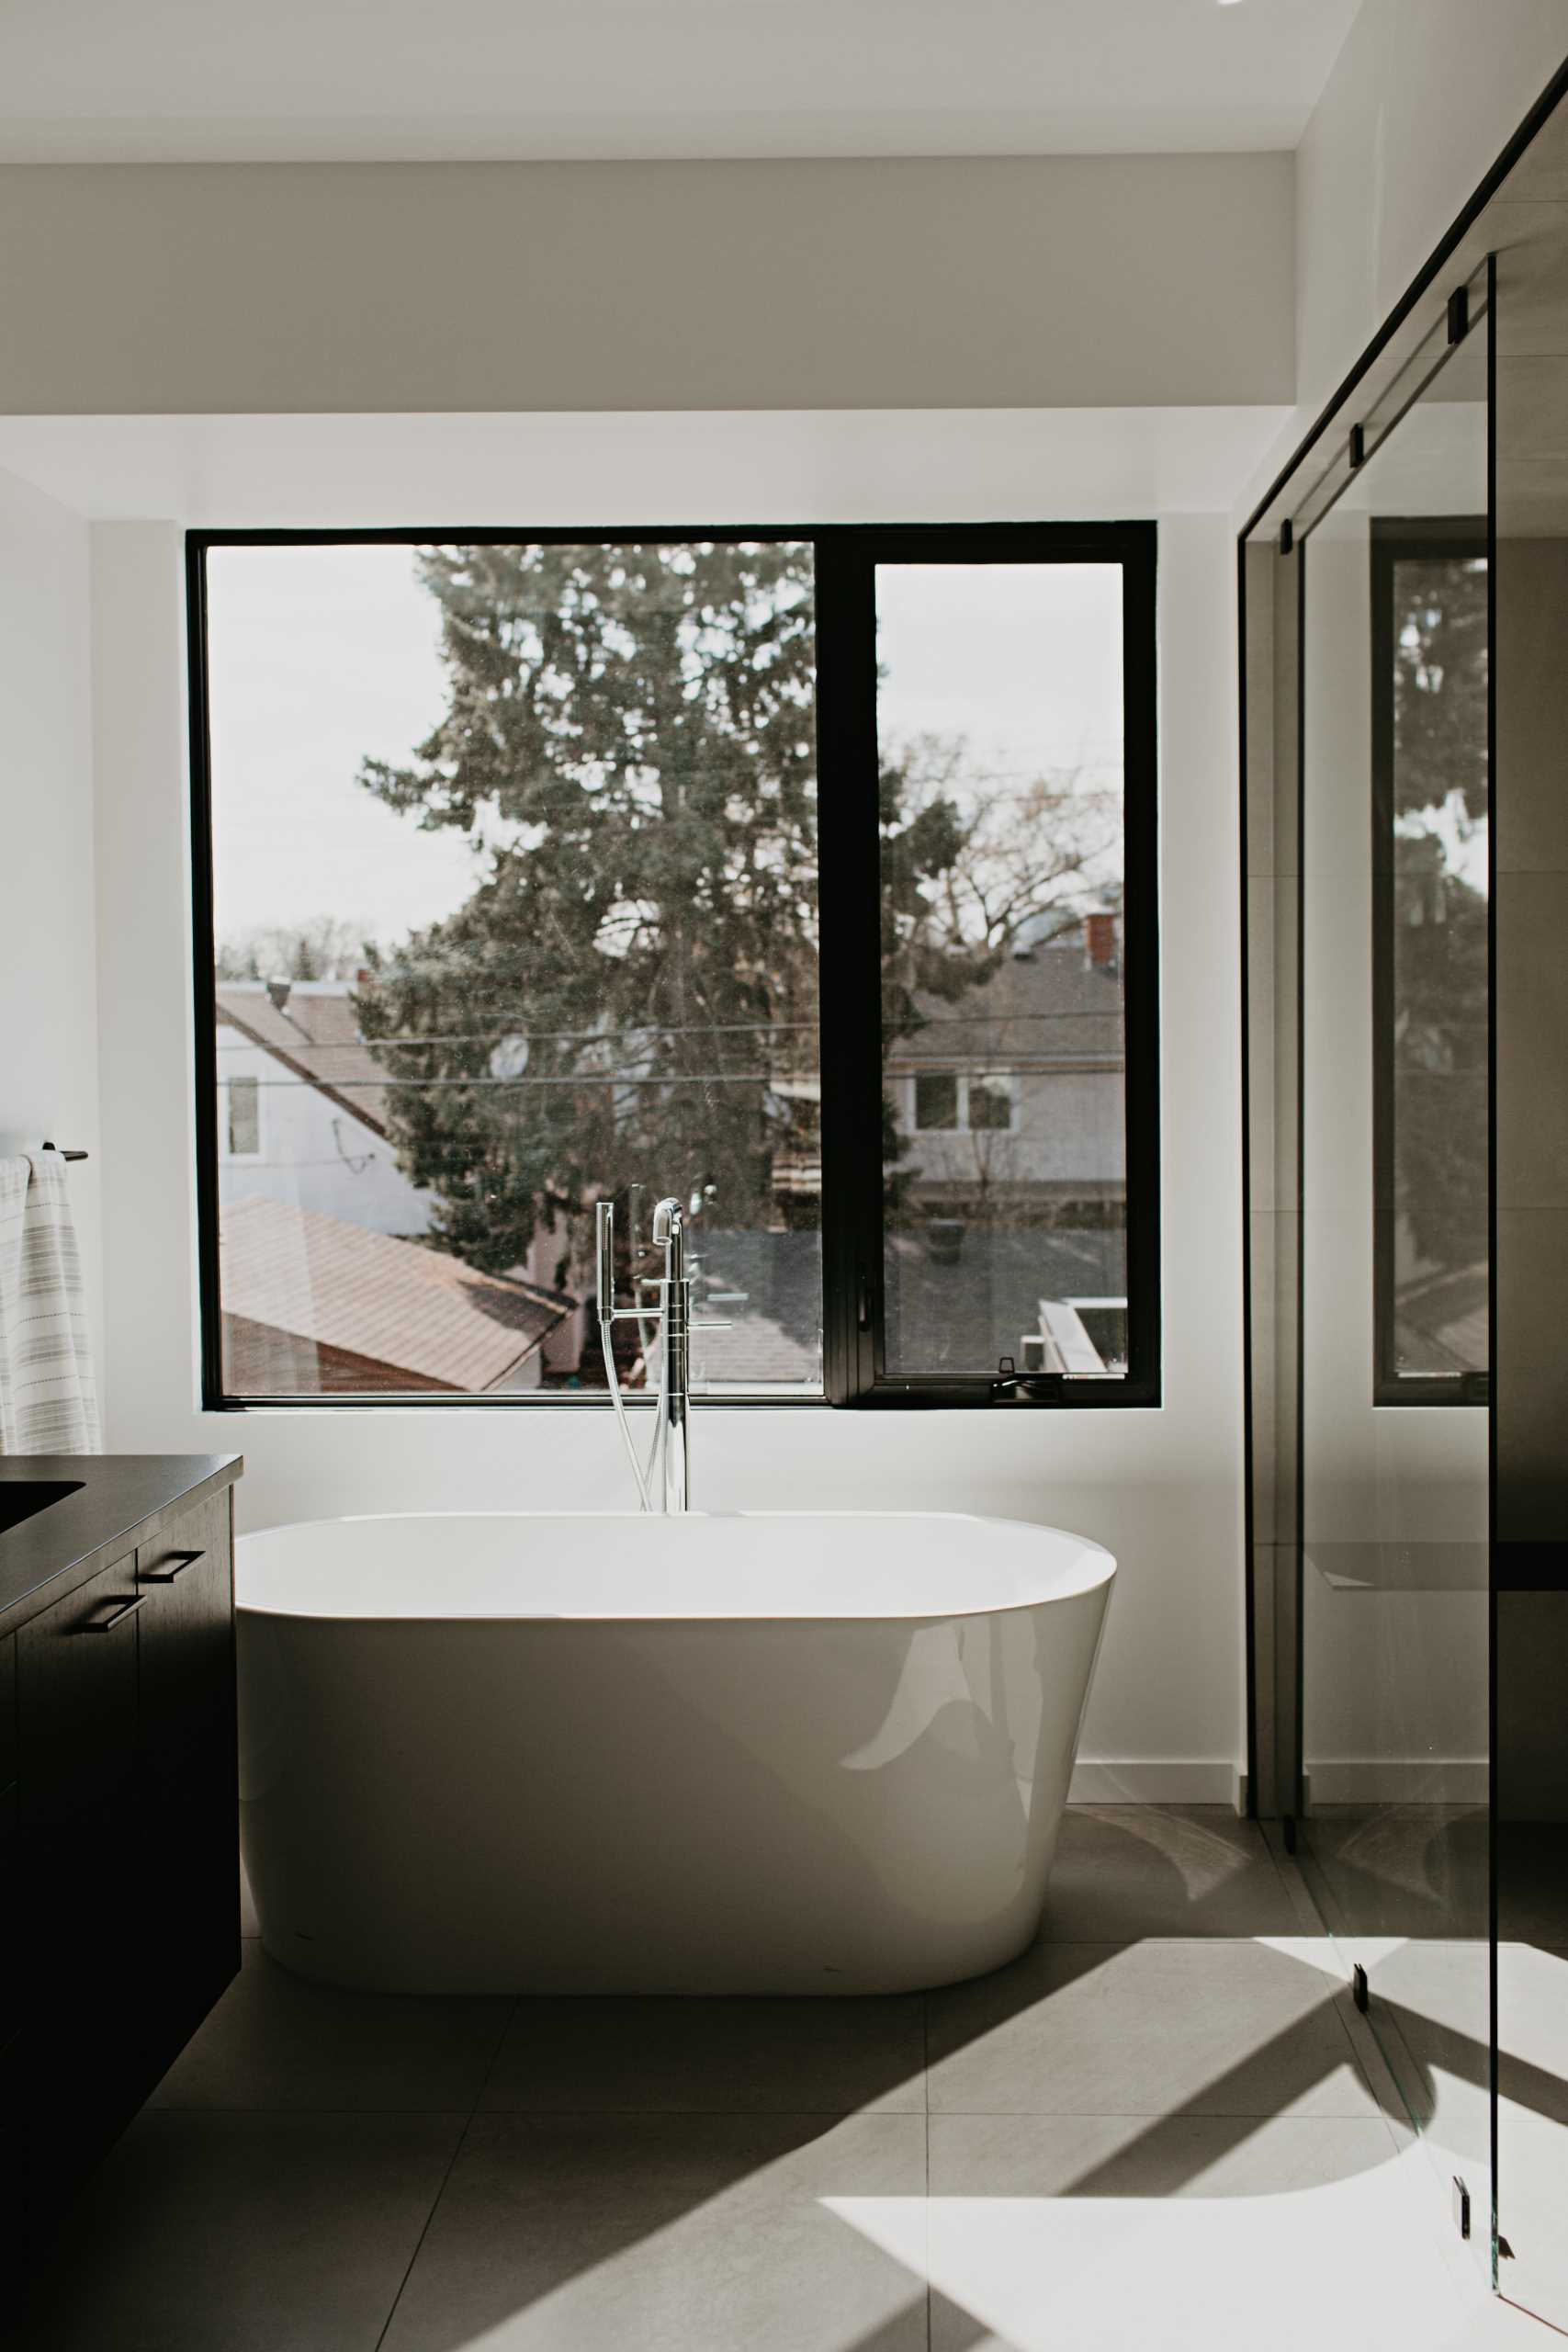 A modern primary bathroom with a freestanding bathtub below the window.